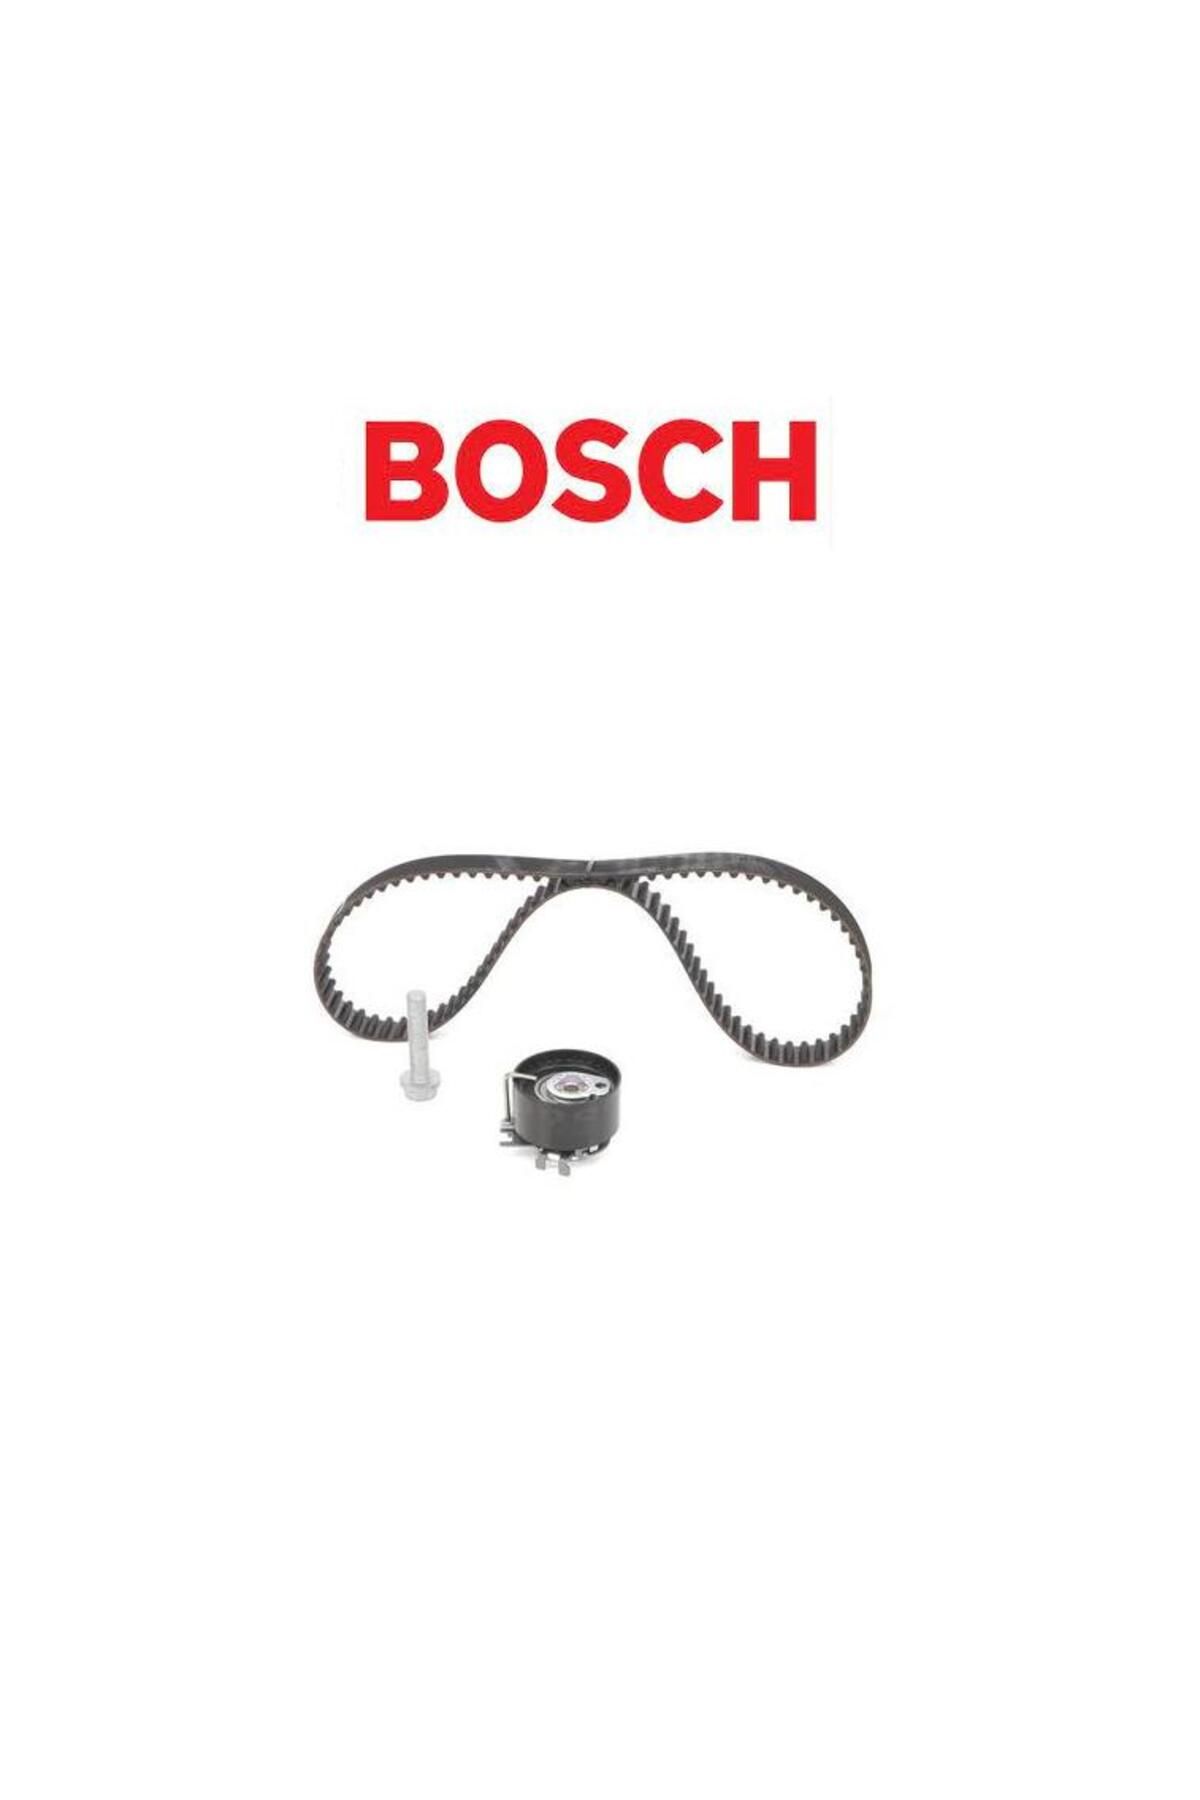 Bosch Triger Set Logan Sandero 1-2 Kubistar X76 Clio 3-4 Symbol Kangoo 1987946704 7701476745